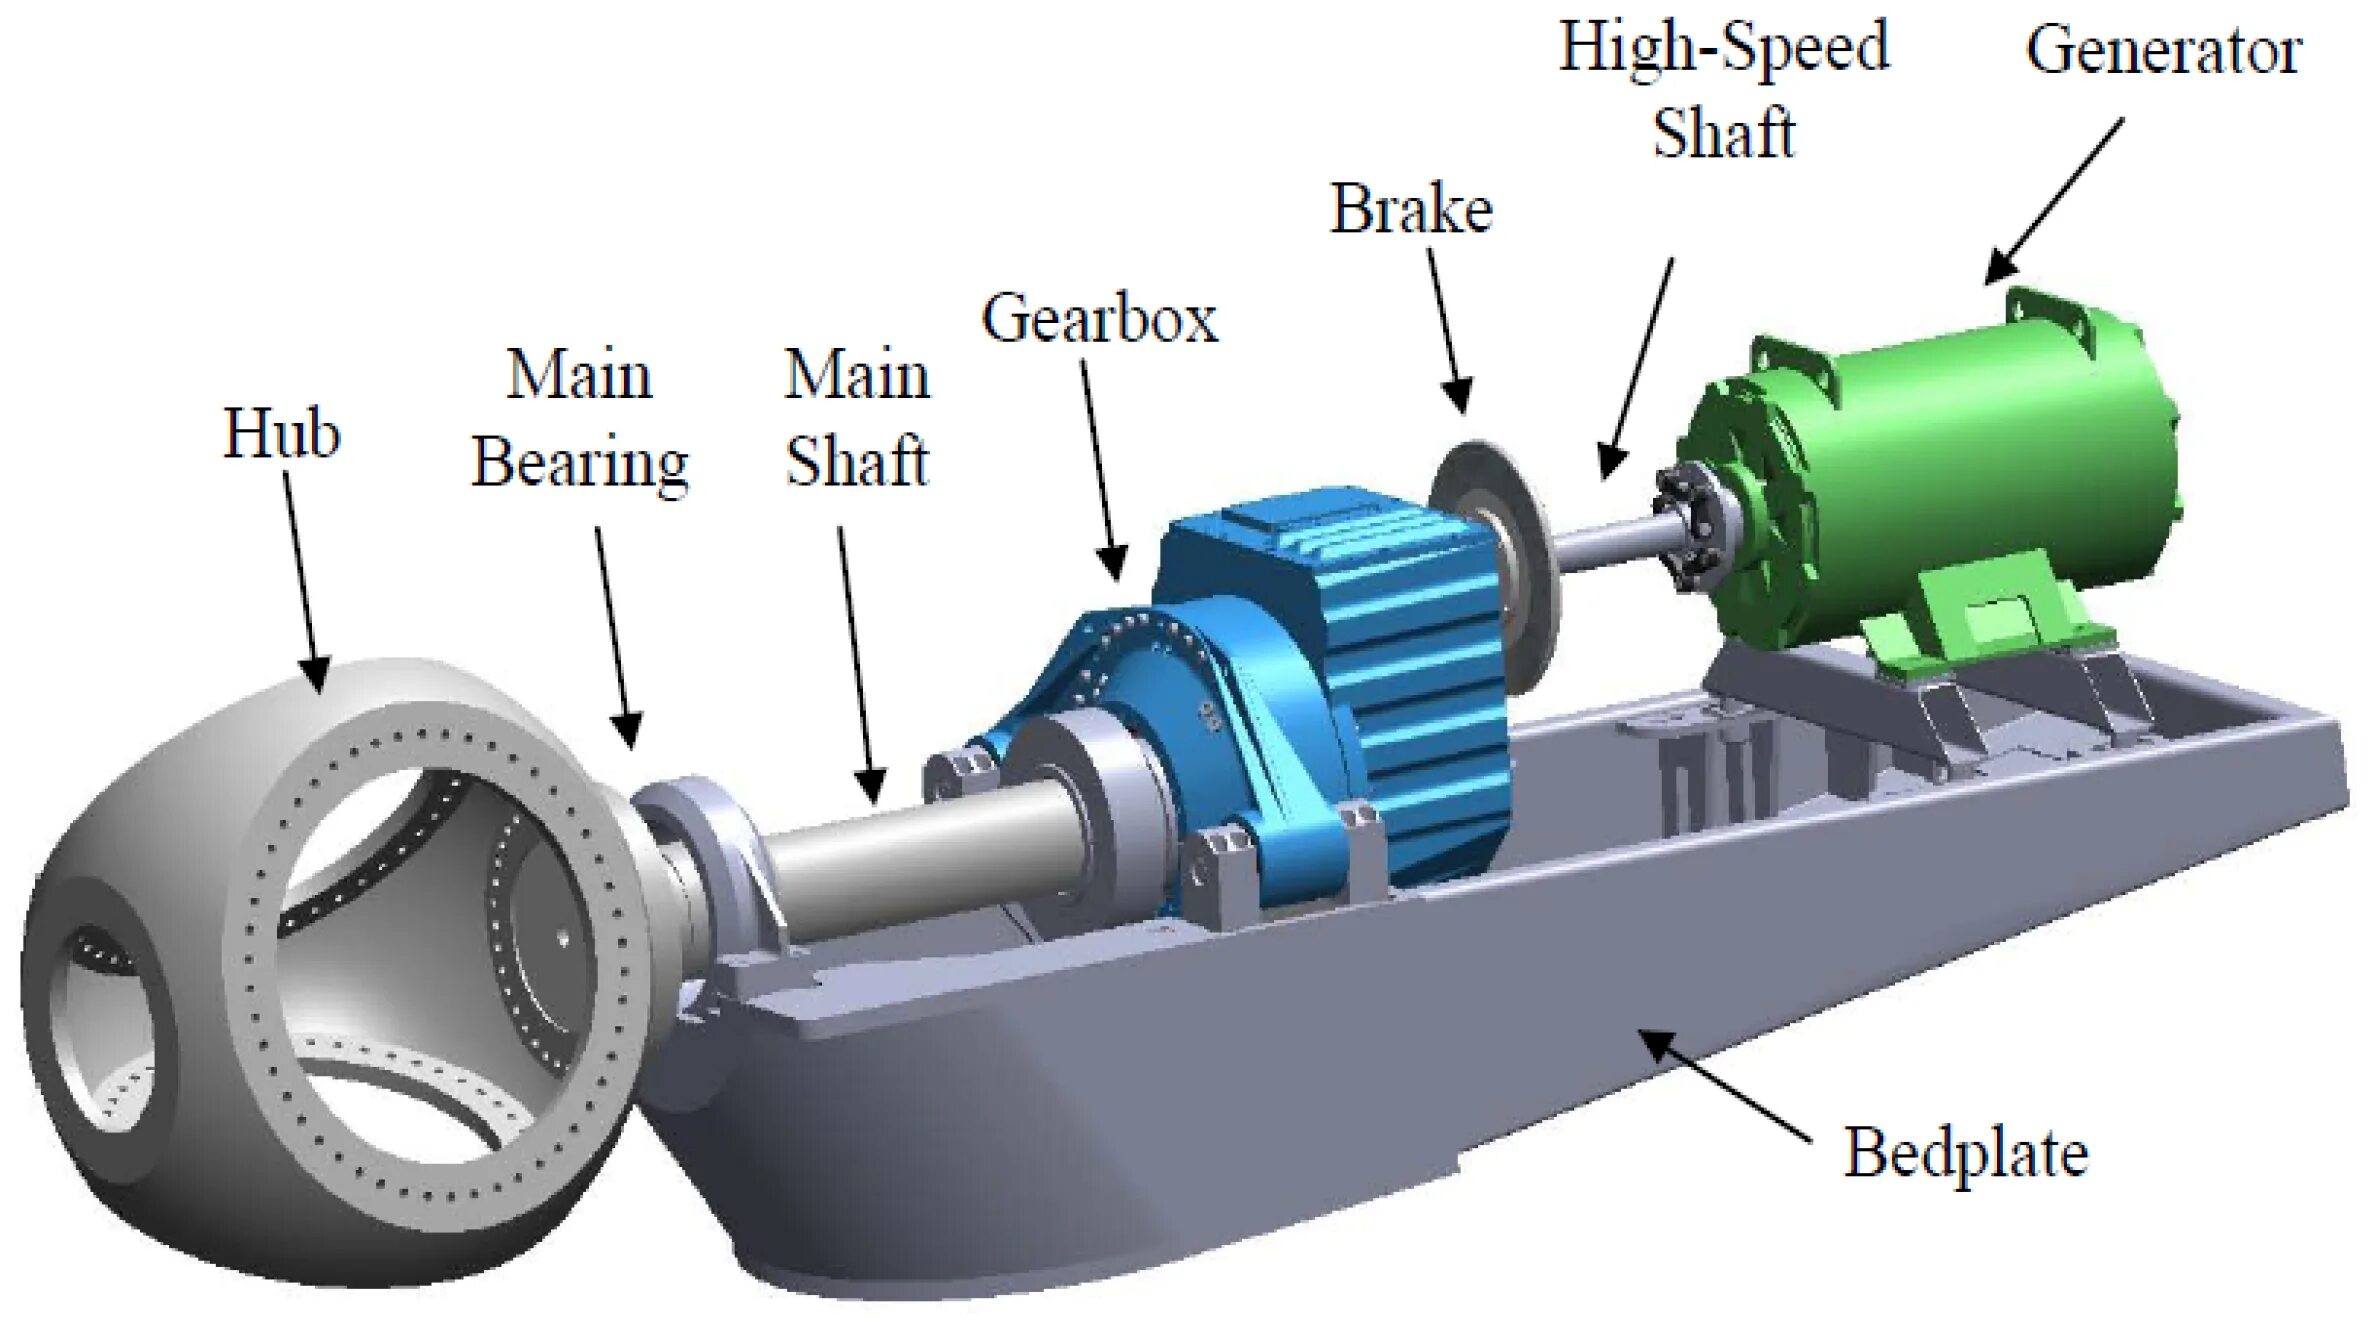 Wind Turbine gearbox. Wind Turbine Hub. Main components of Wind Turbine. Турбина генератора. Main drive